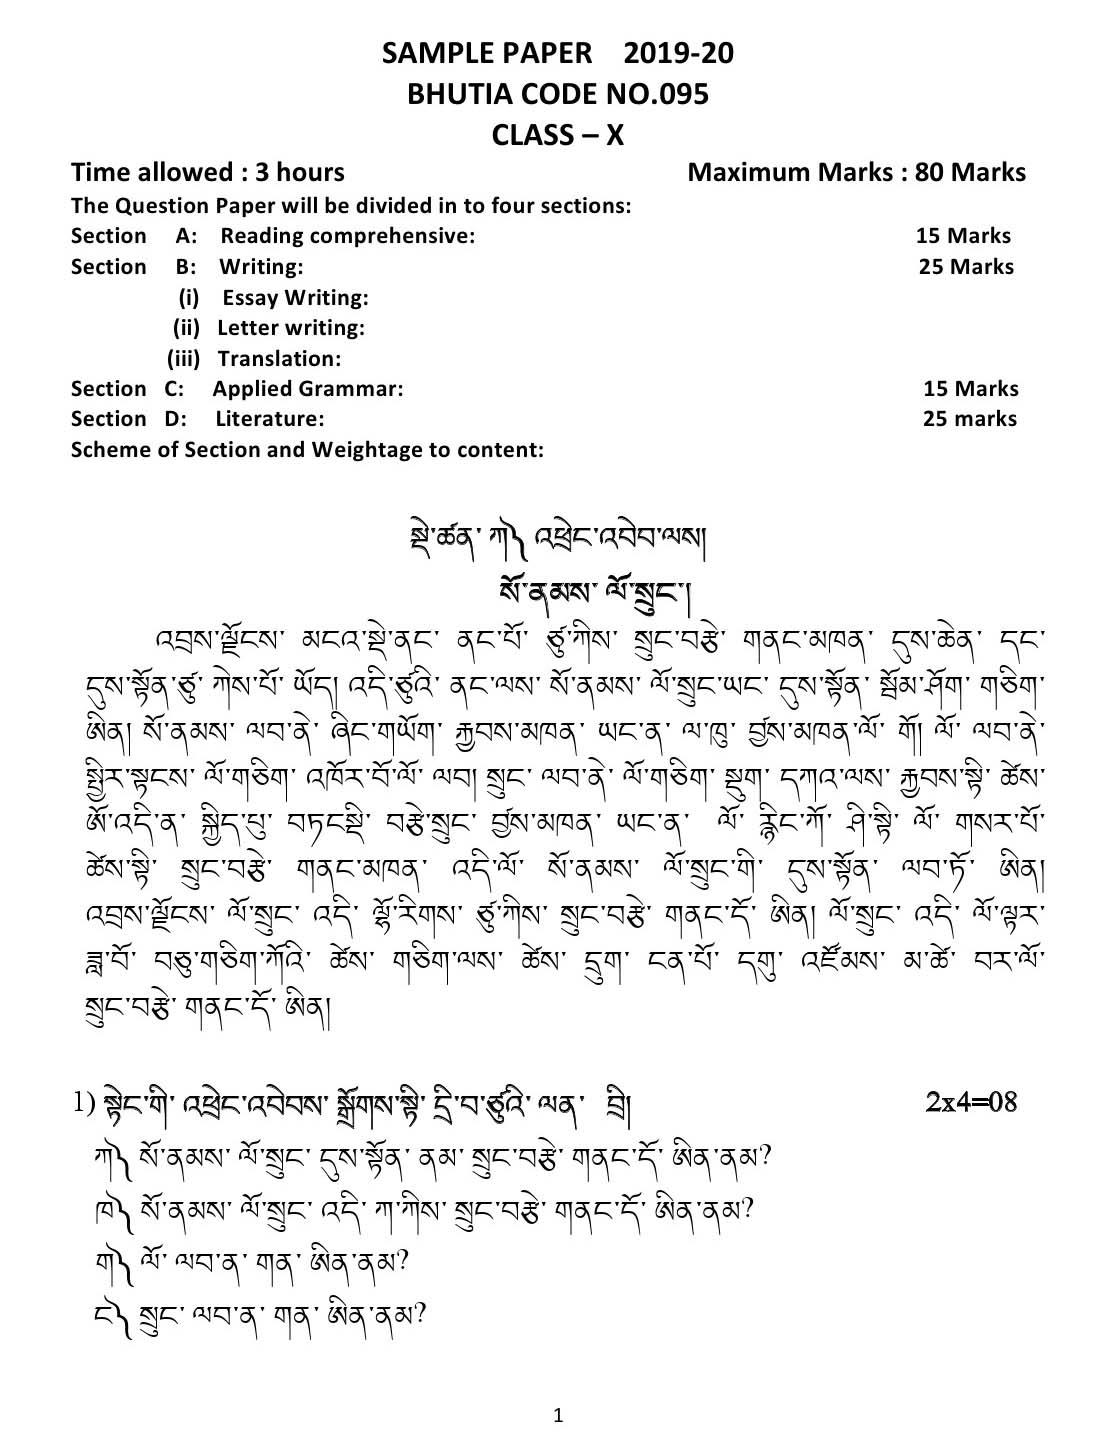 Bhutia CBSE Class X Sample Question Paper 2019 20 - Image 1